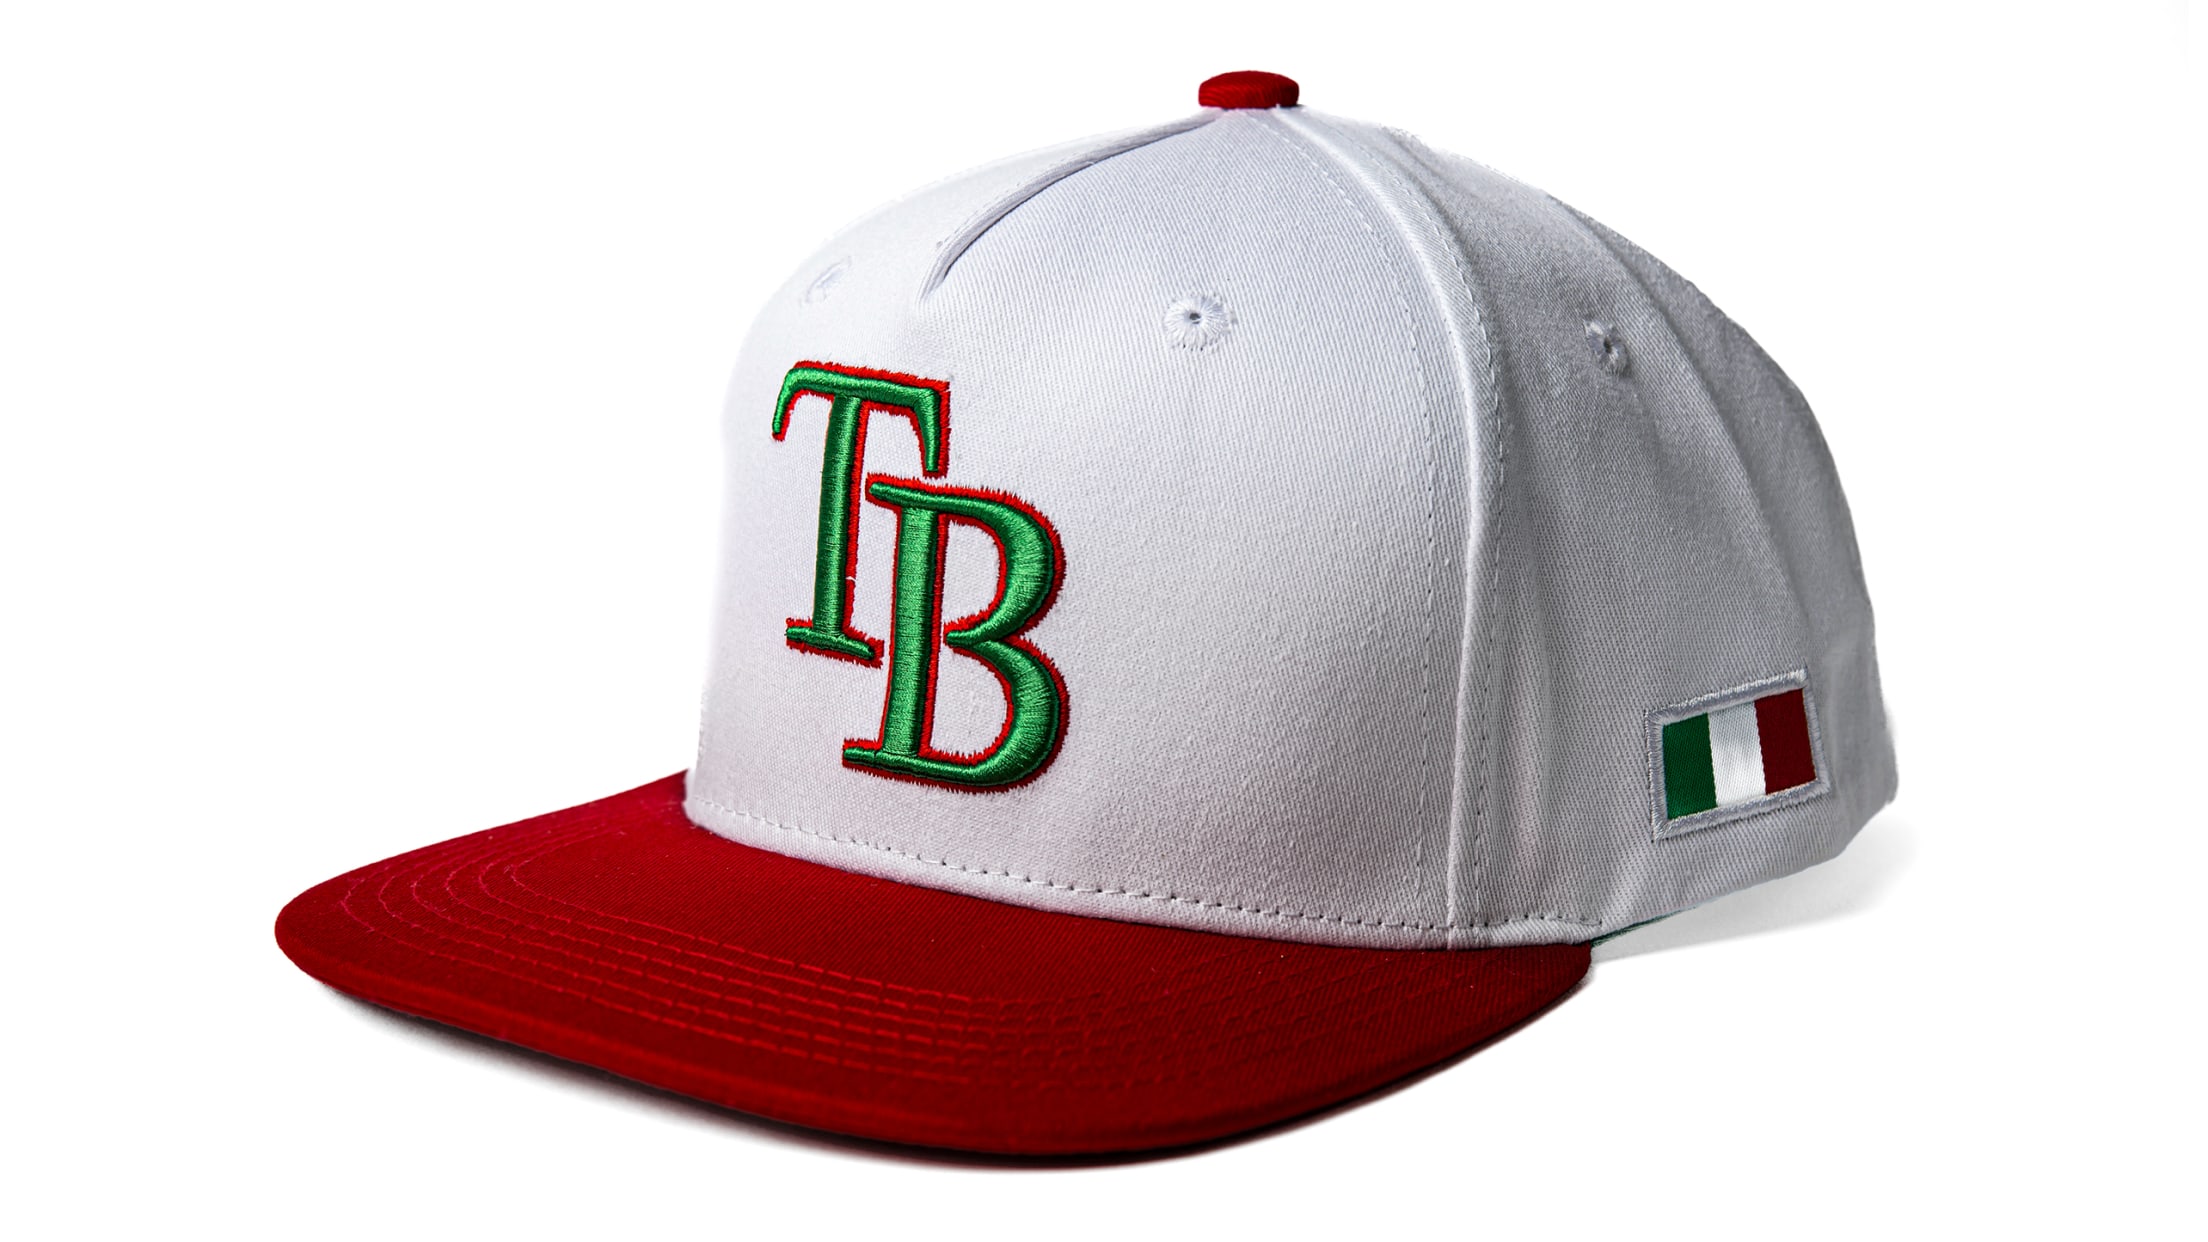 Celebrate Italian Heritage Night with the Nationals - Italian American  Baseball Foundation